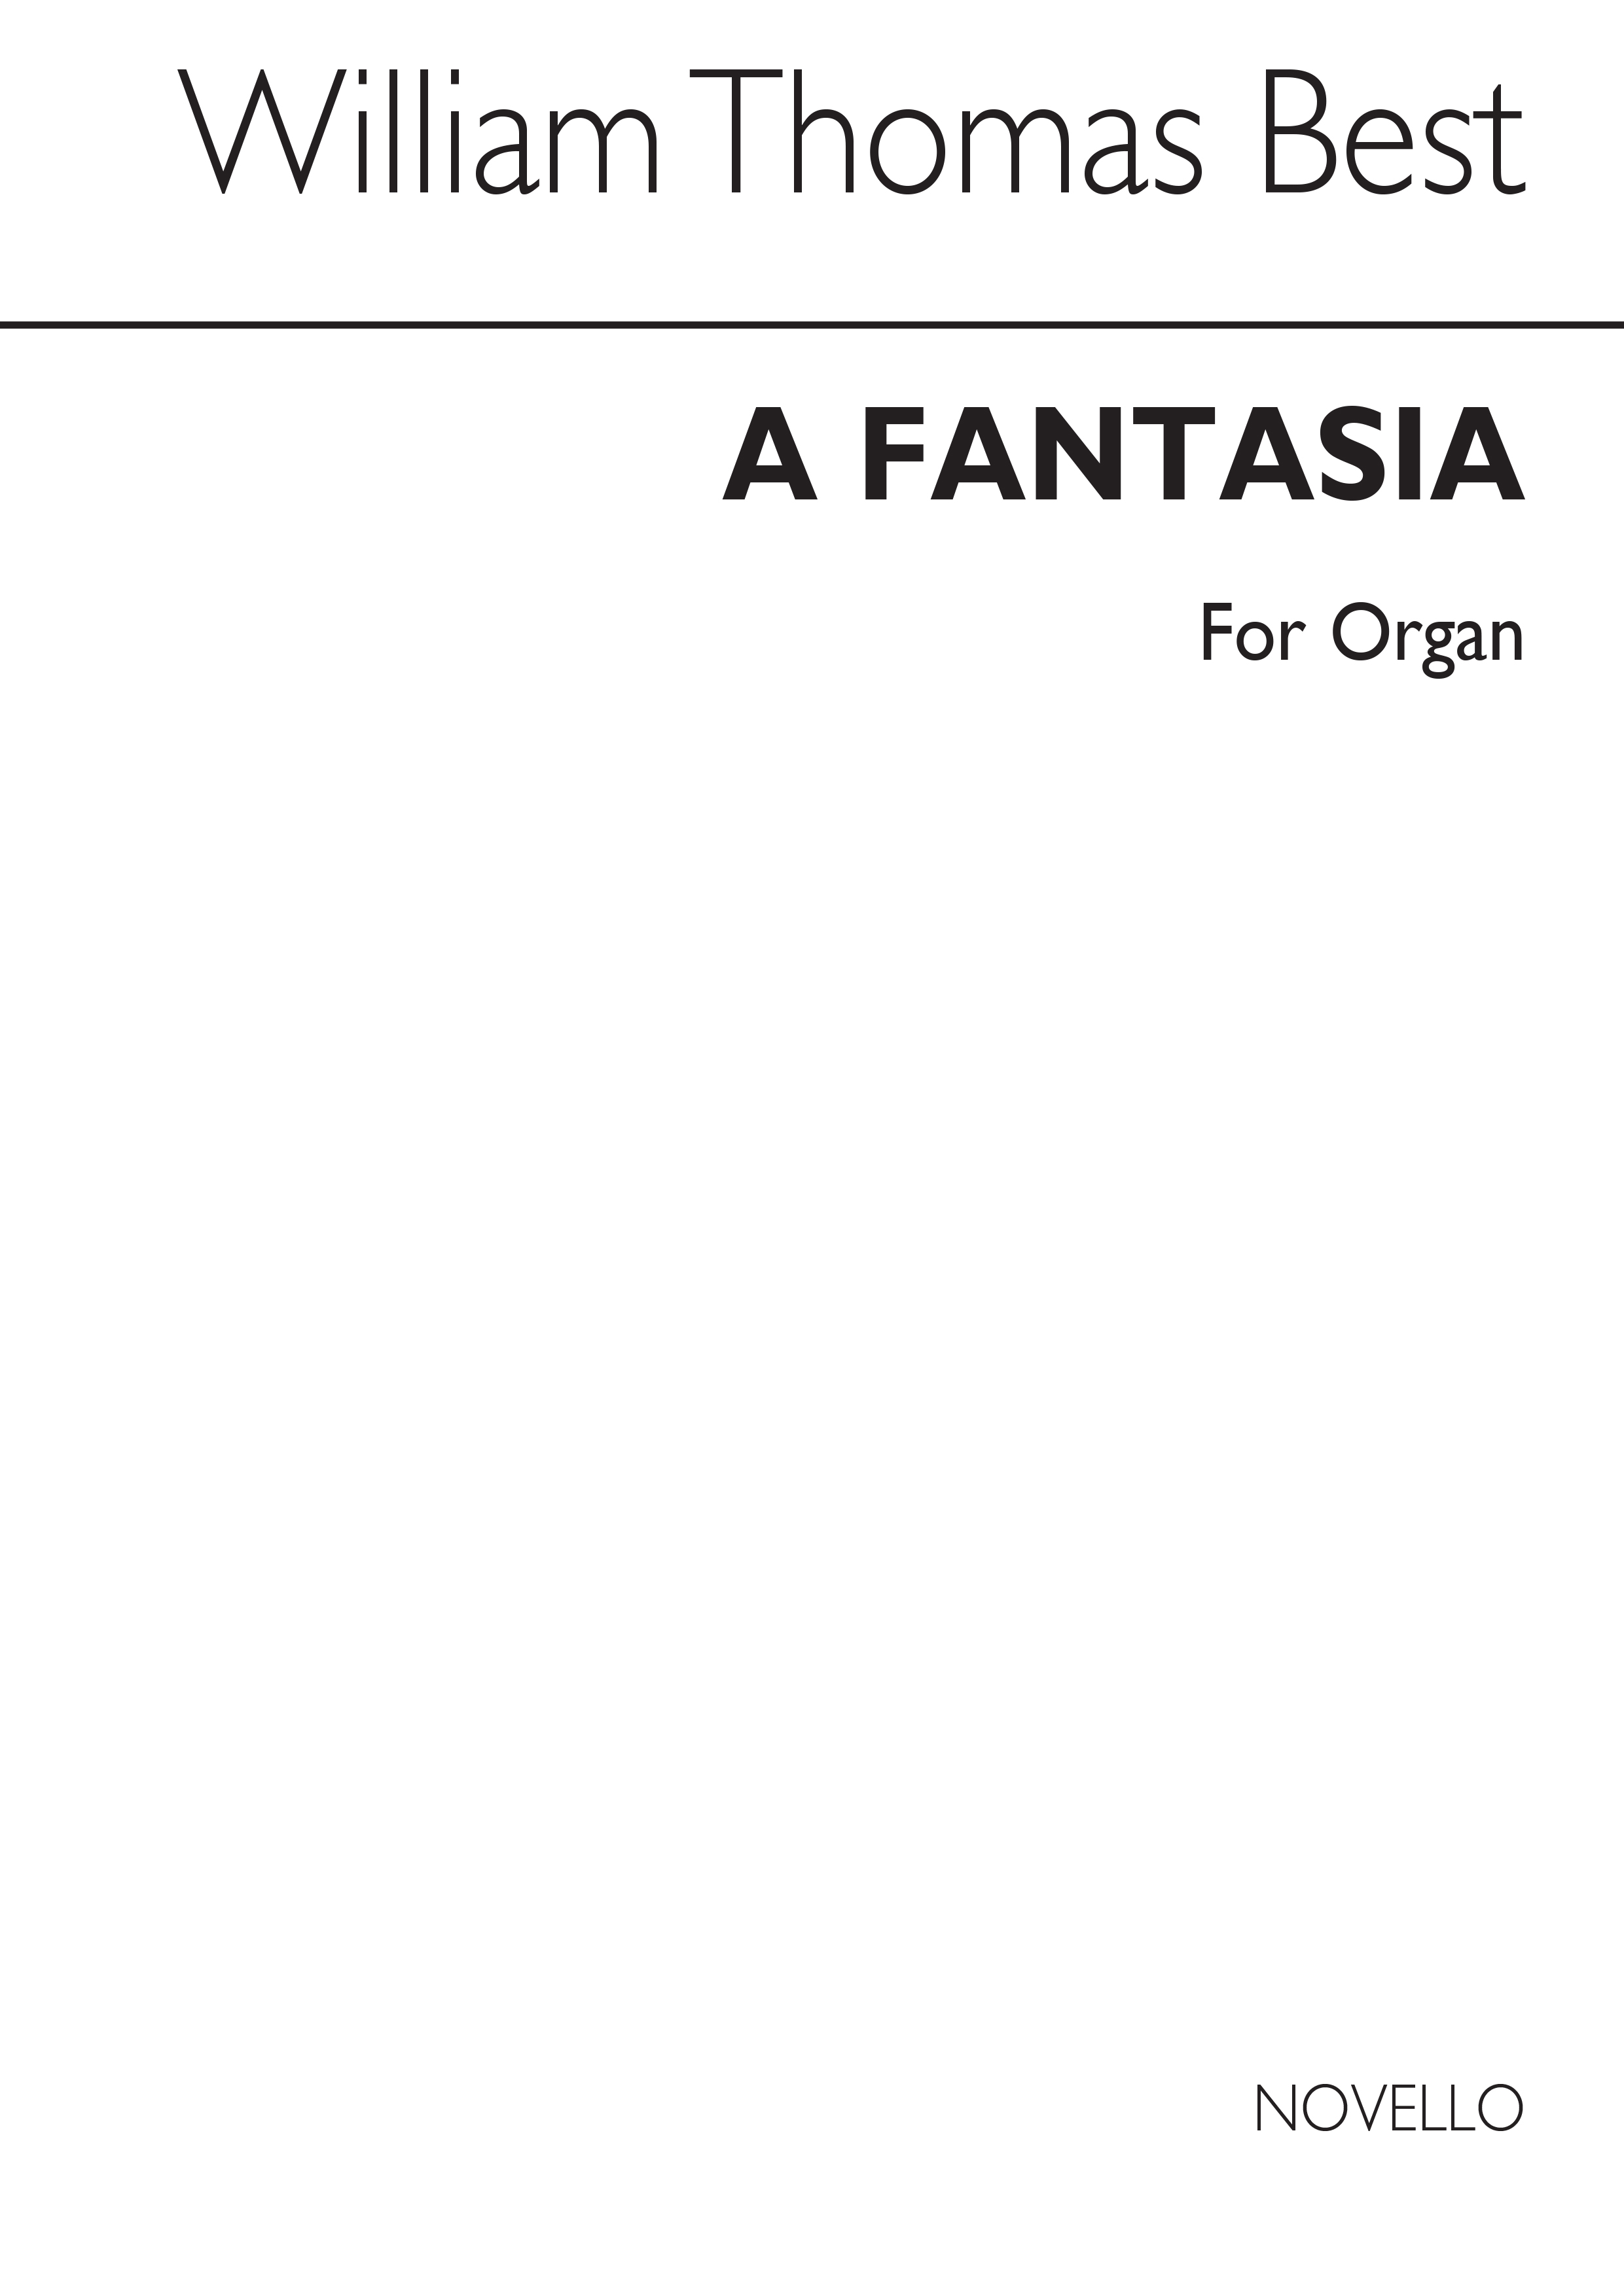 W.T. Best: Fantasia For Organ